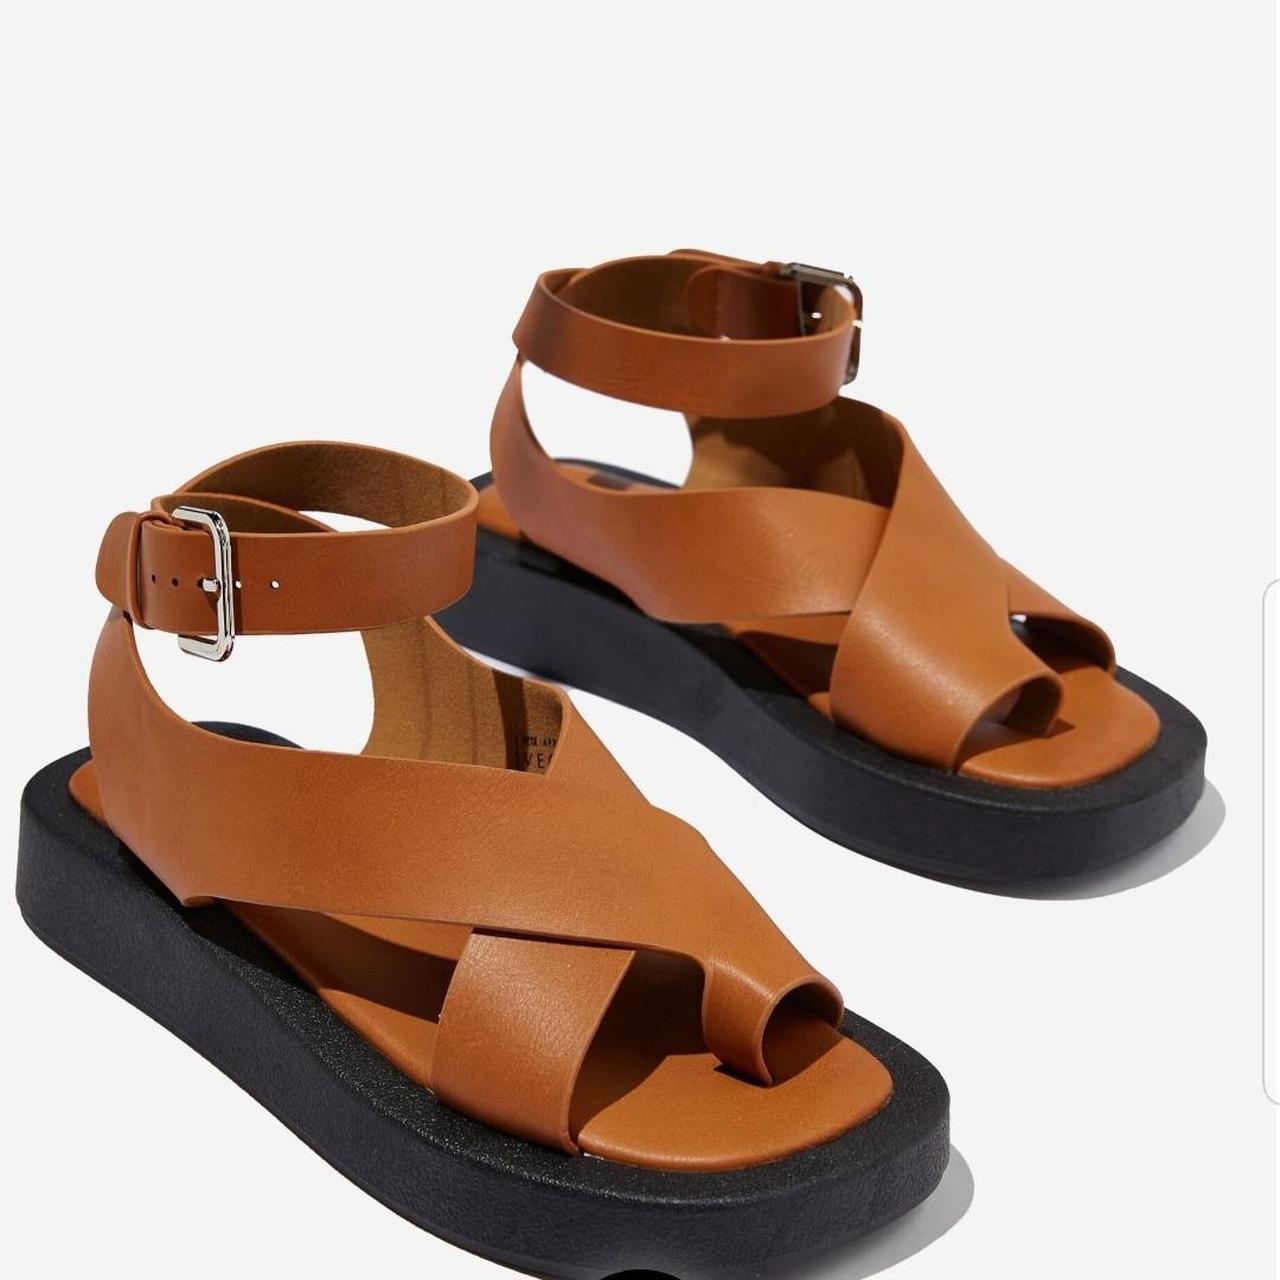 Rubi | Shoes | Rubi Black And Gold Sandals Size 37 6 | Poshmark